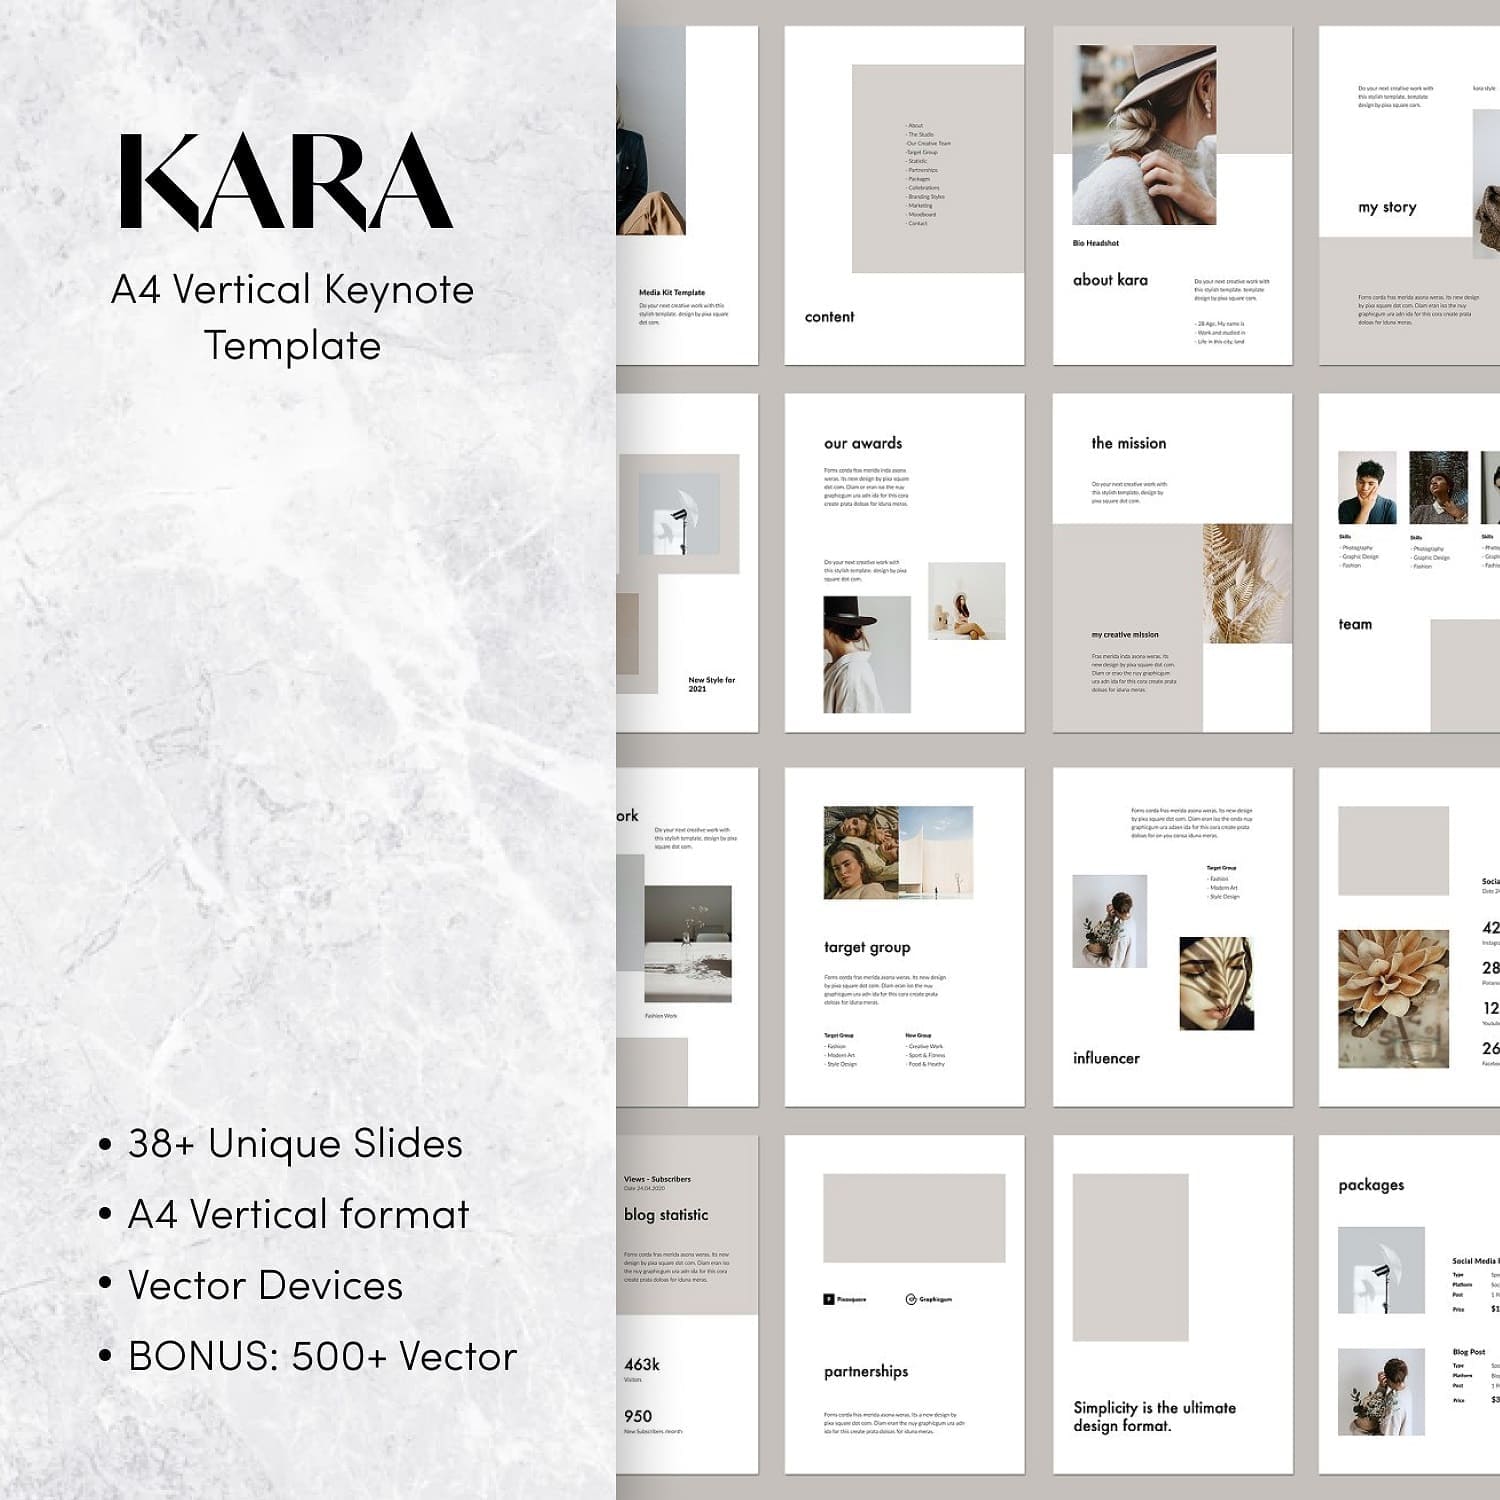 Kara A4 vertical keynote template, inscription: 38+ Unique Slides, A4 Vertical format, Vector Devices, Bonus: 500+ Vector.